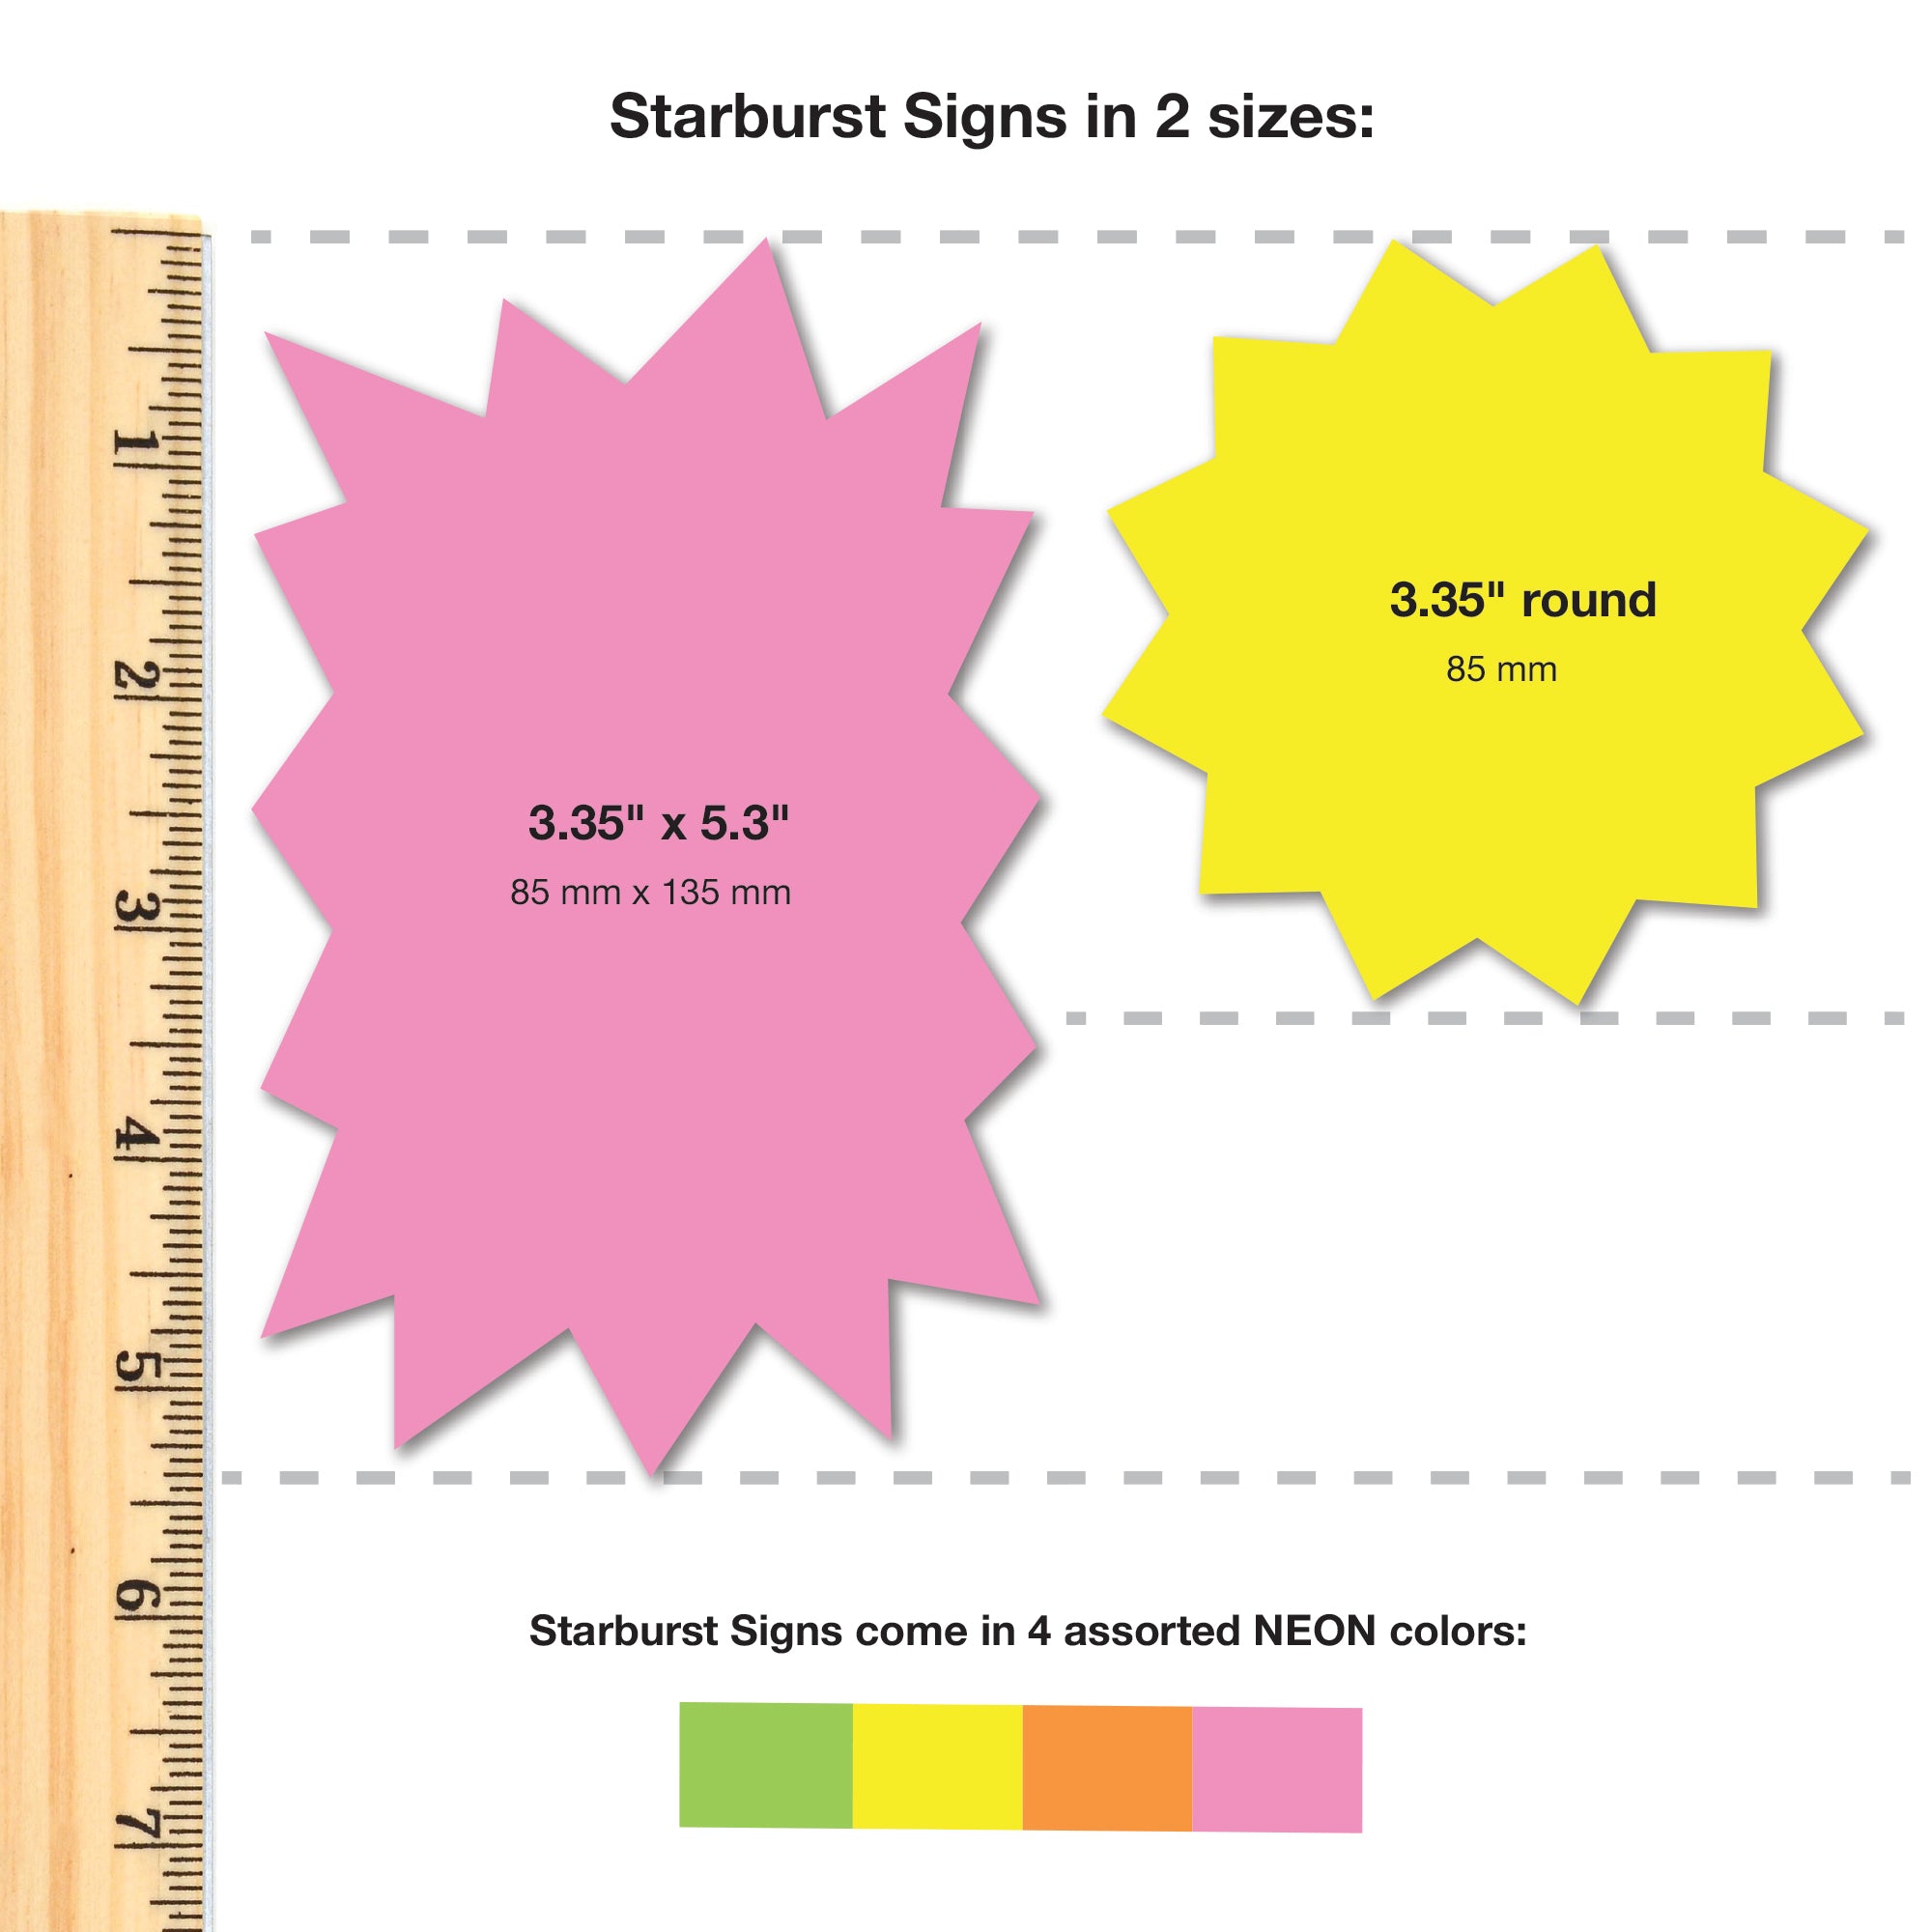 Starburst Signs